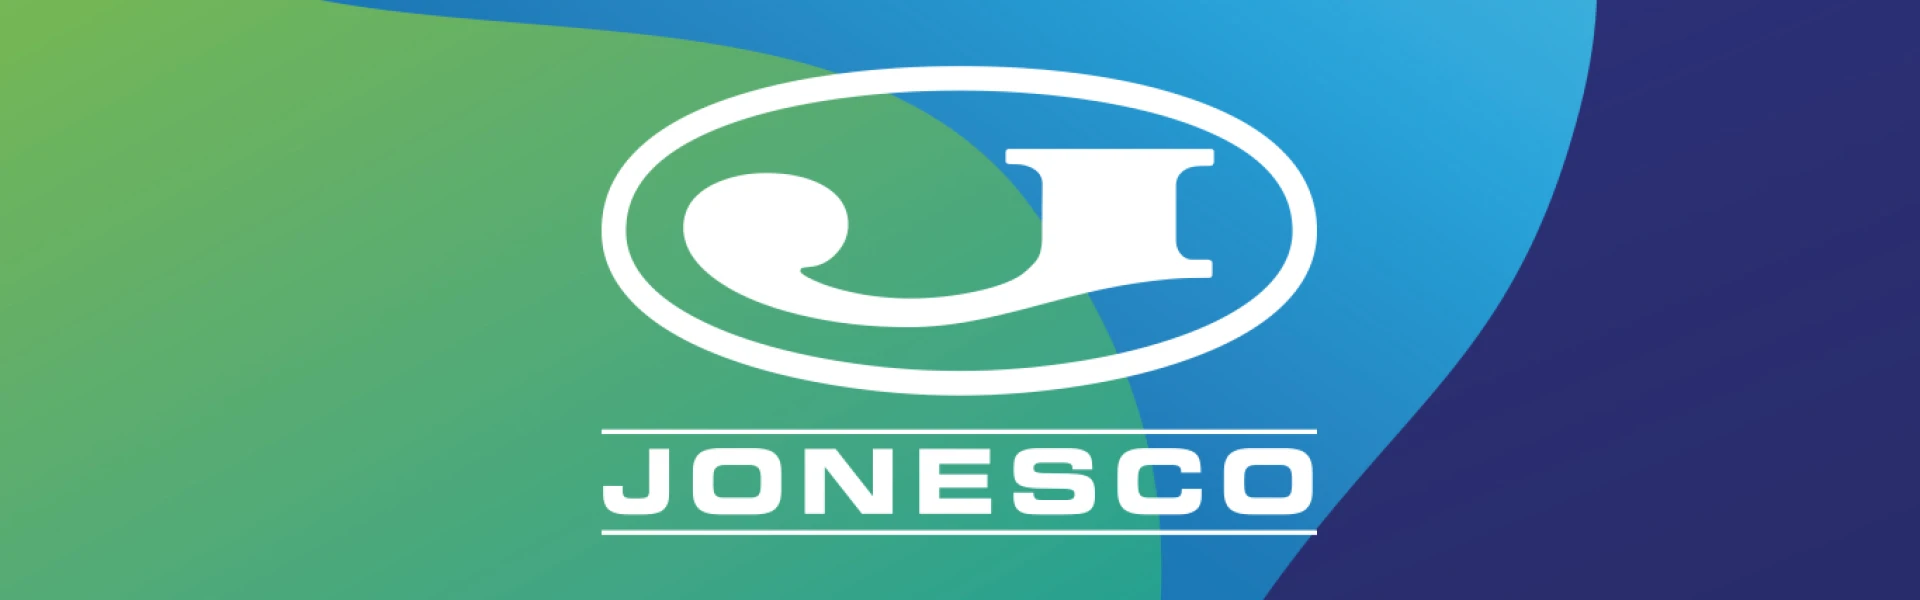 Jonesco Brand Identity logo design